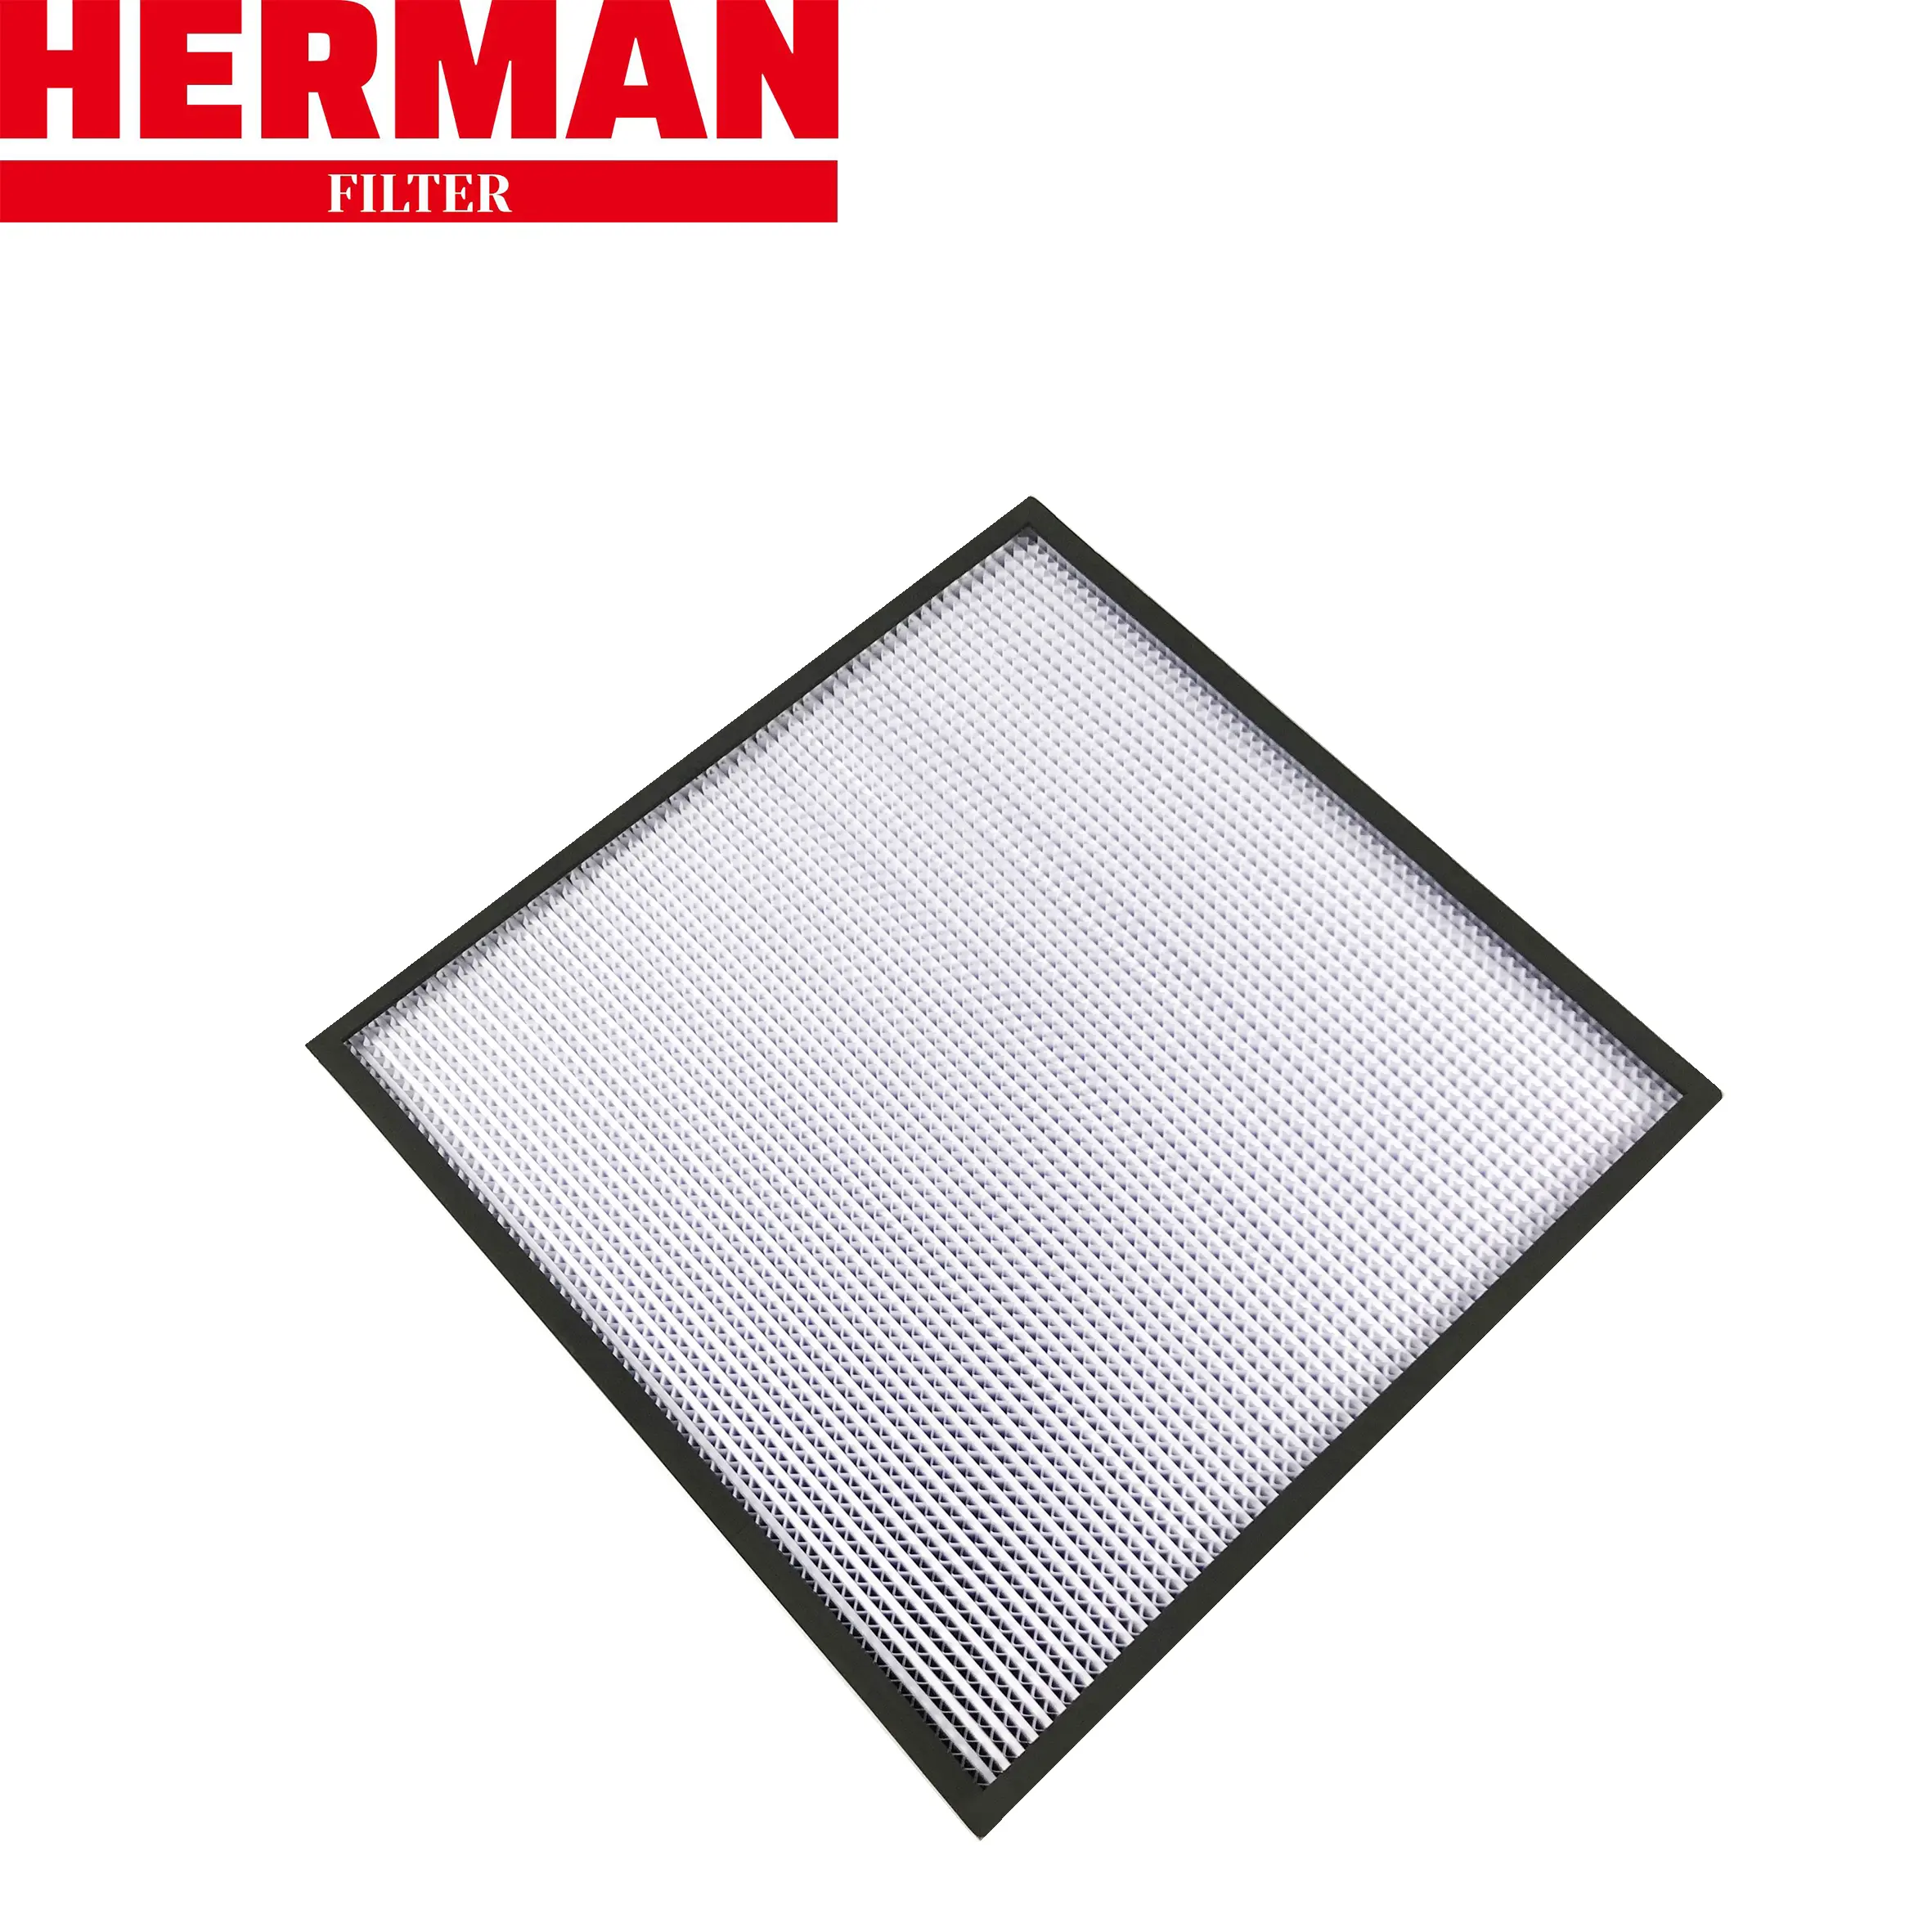 Carcasa de filtro de aire Donaldson, pantalla de filtro de aire acondicionado de papel para filtro de aire de producción